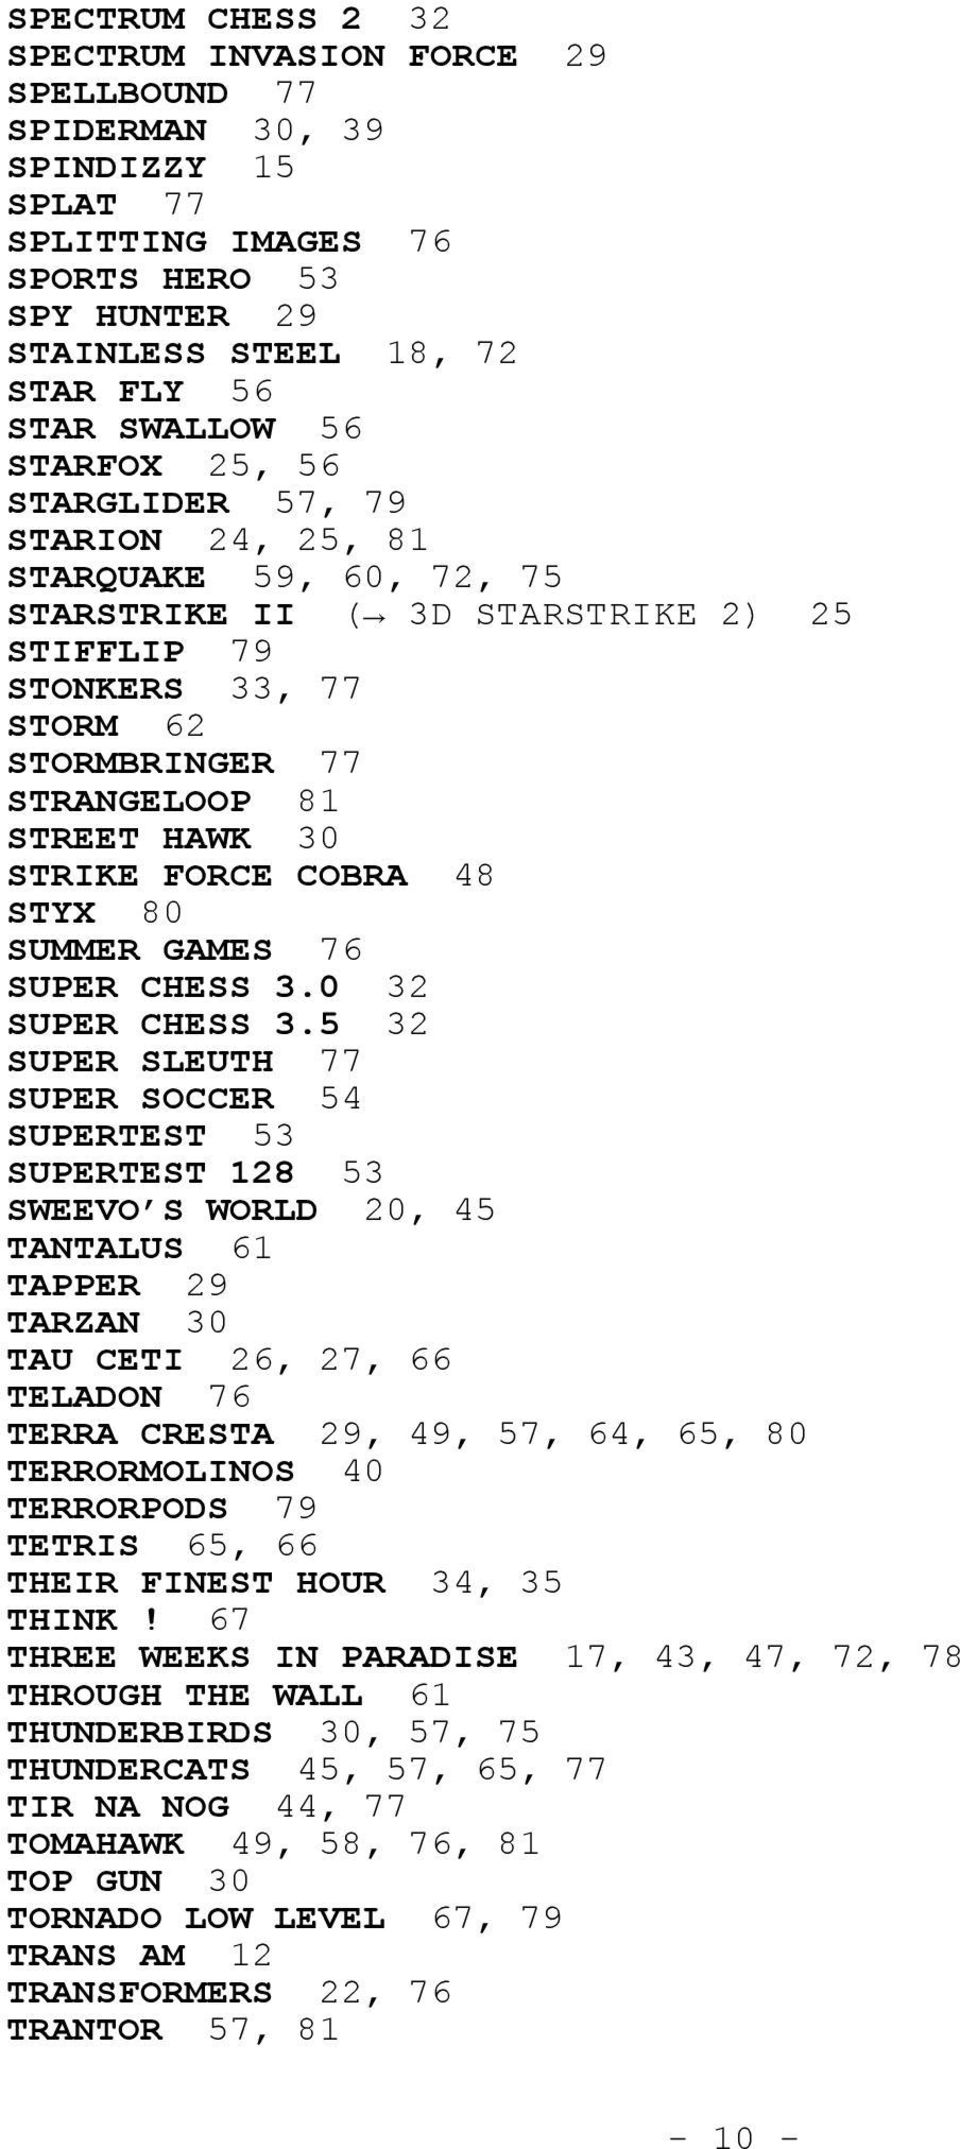 STRIKE FORCE COBRA 48 STYX 80 SUMMER GAMES 76 SUPER CHESS 3.0 32 SUPER CHESS 3.